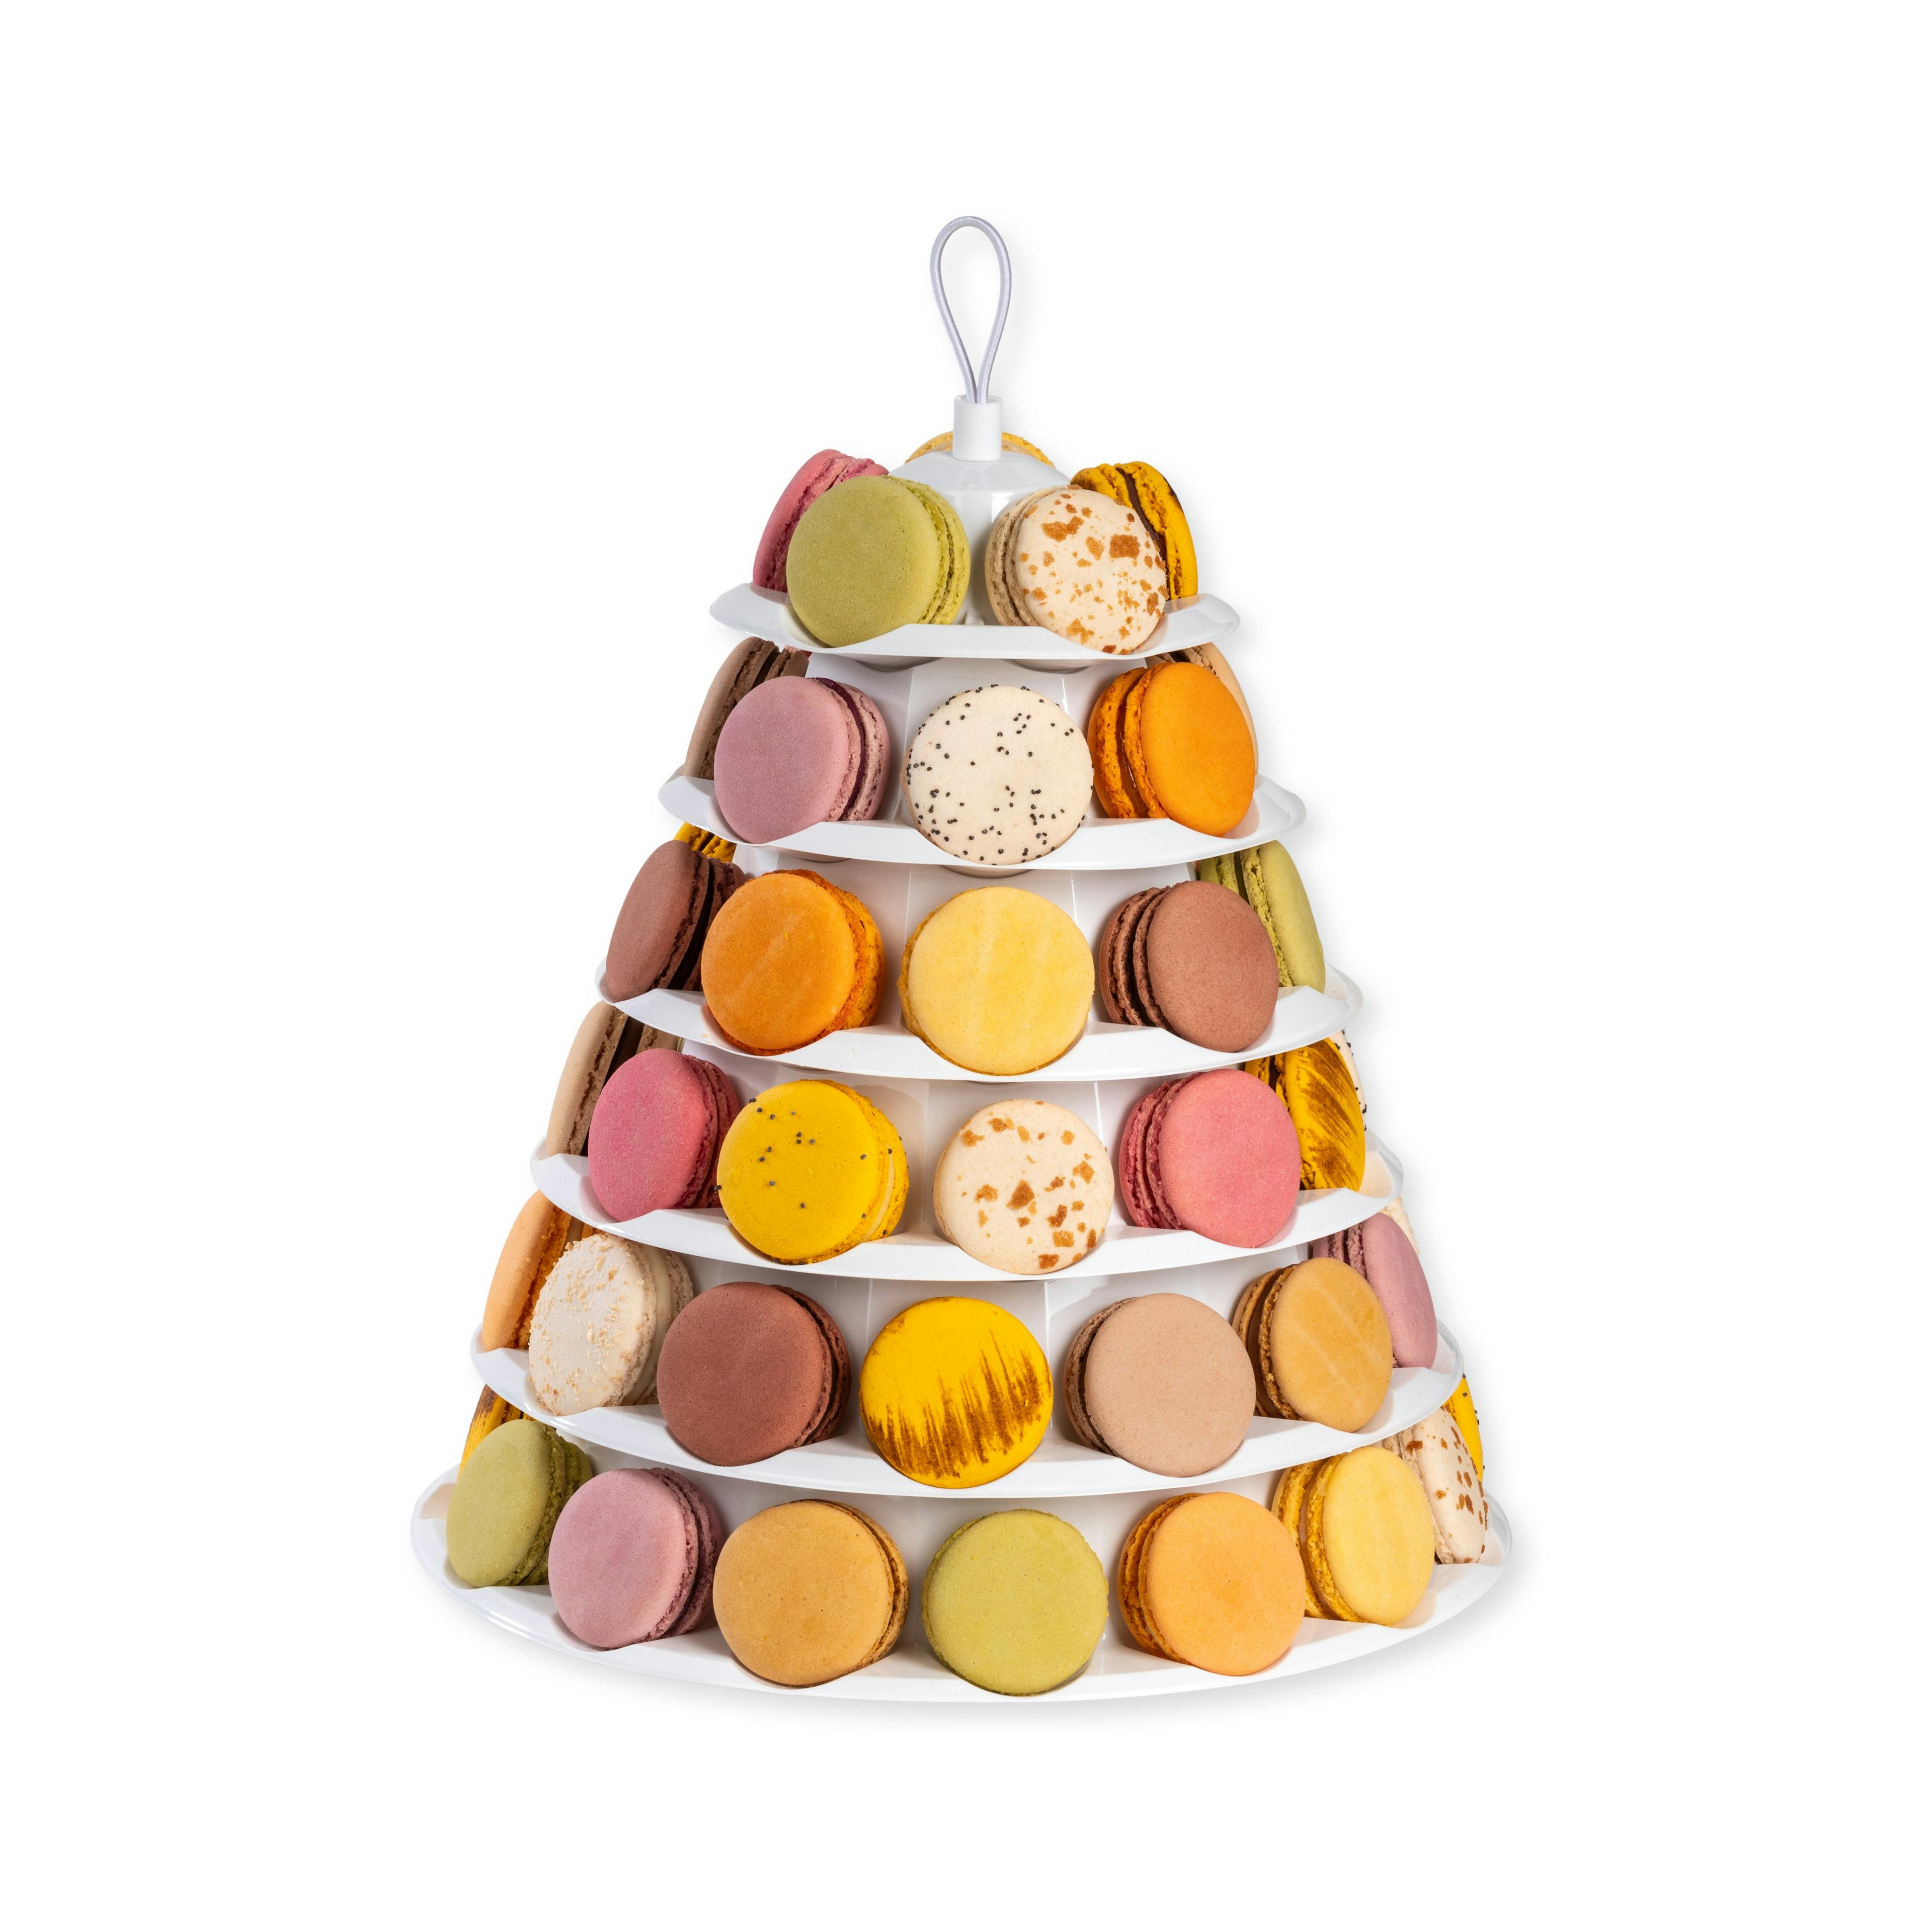 Pyramide macarons assortis - Vincent Vallée chocolatier champion du monde